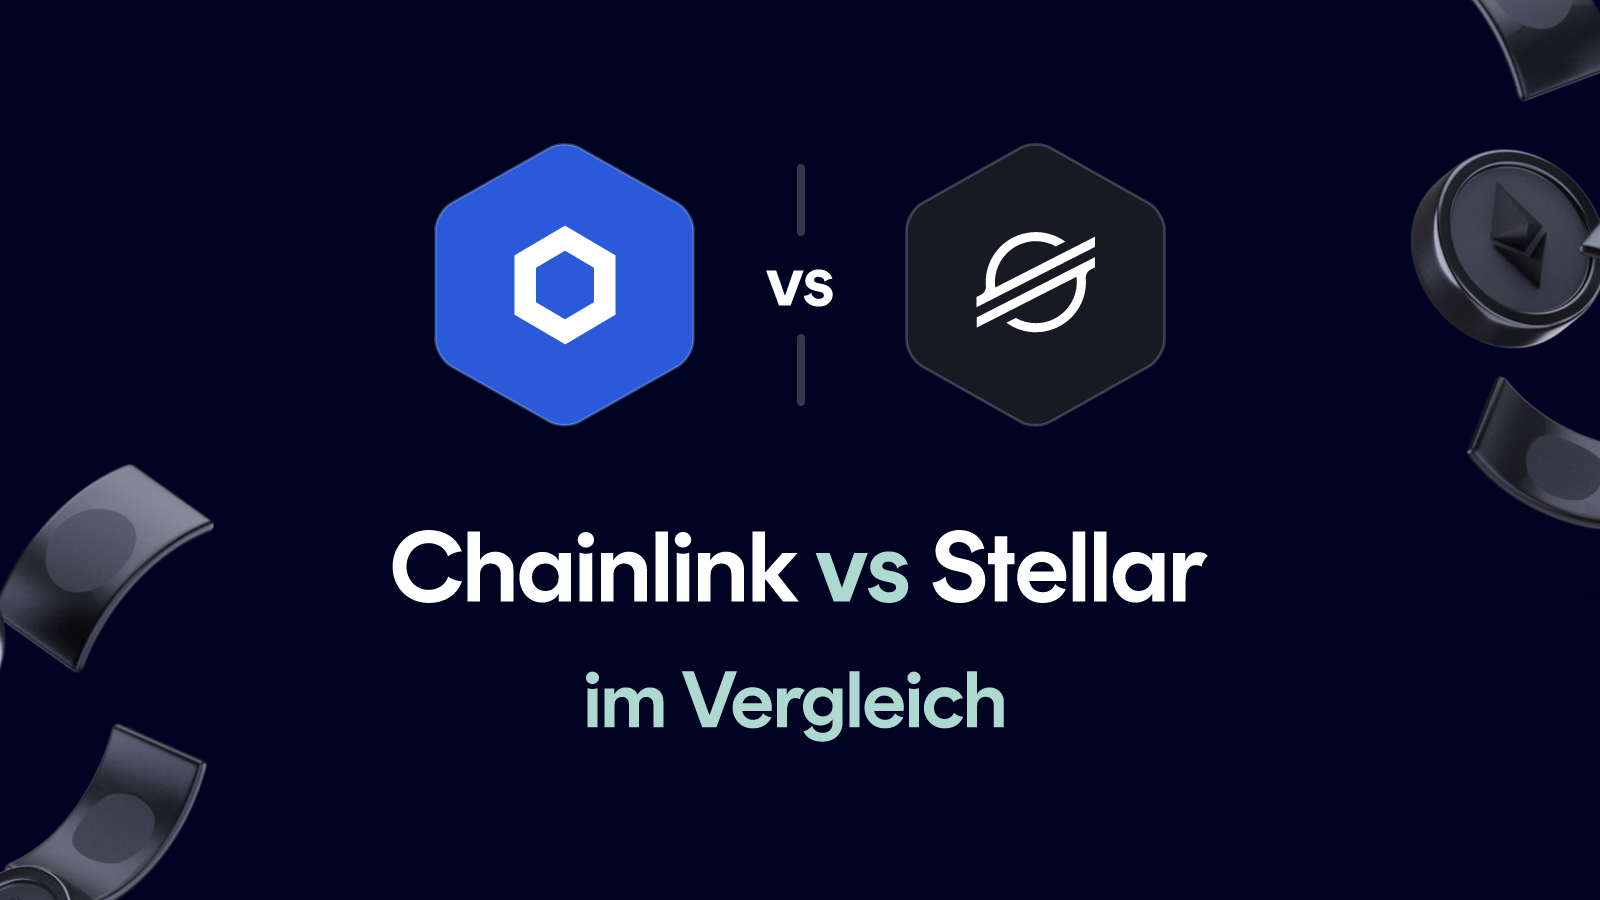 Chainlink vs Stellar